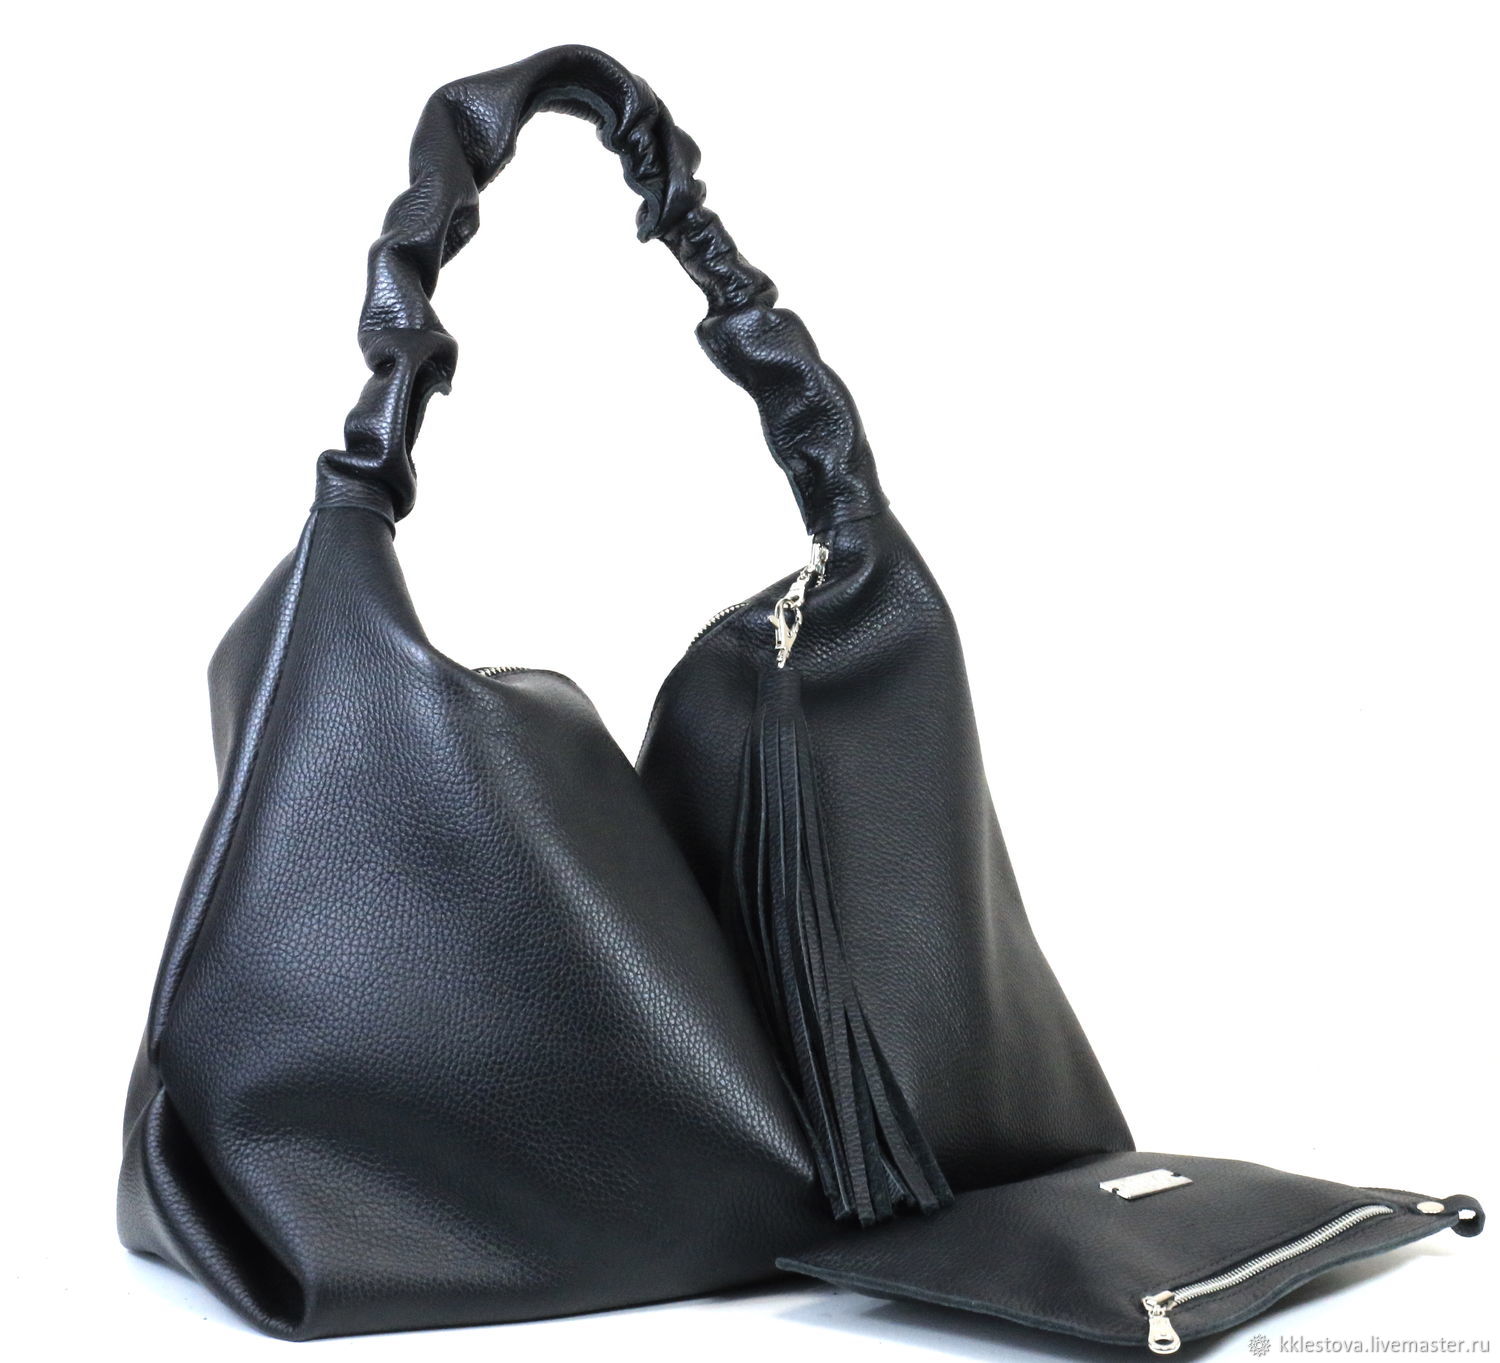 Bag - hobo - shopper - black with pocket and cosmetic bag, Sacks, Moscow,  Фото №1